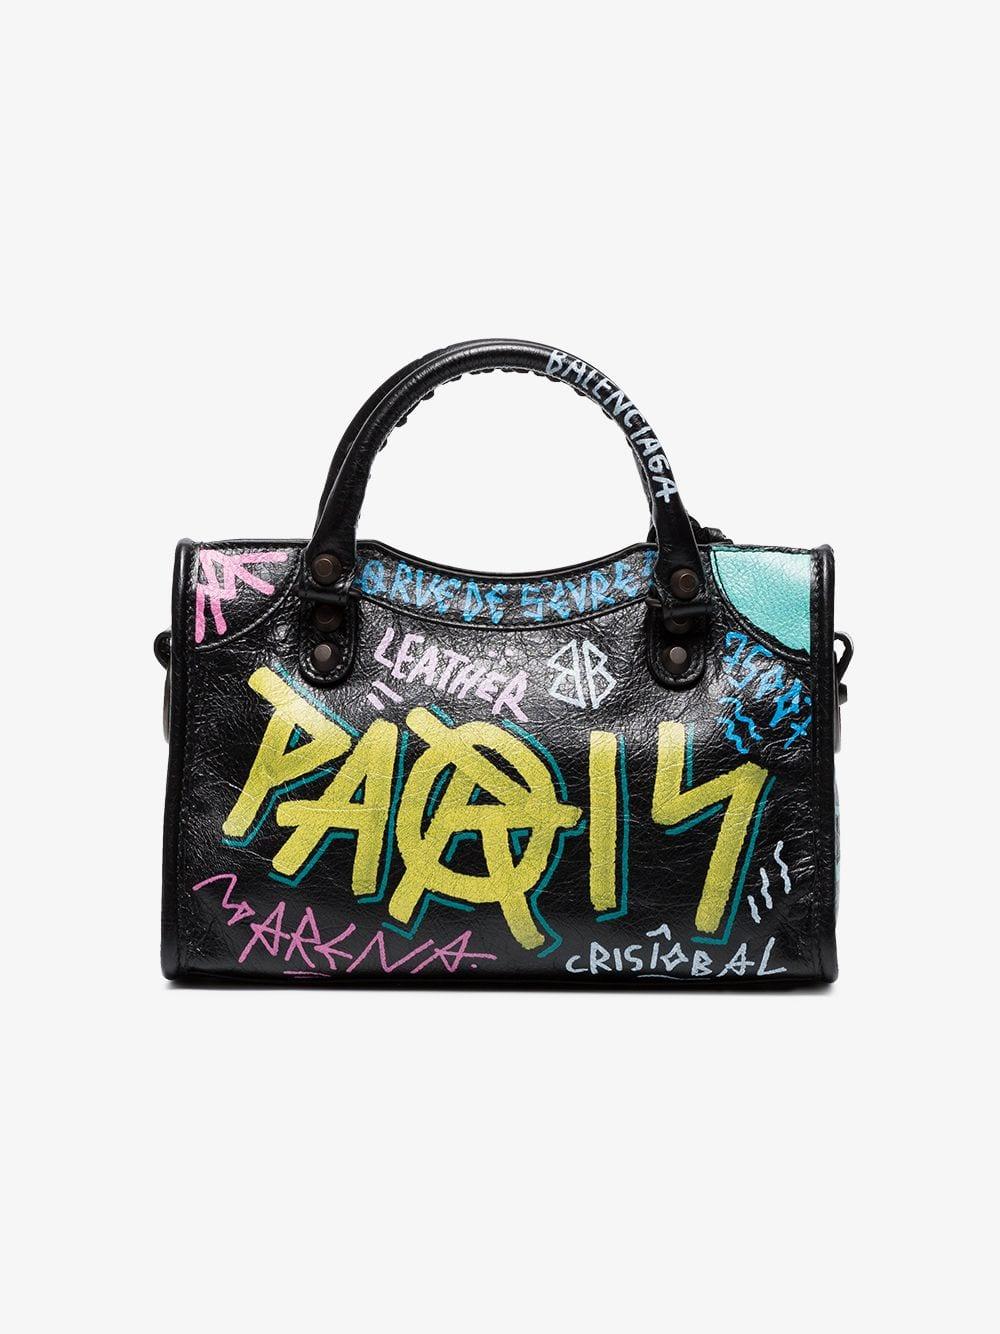 Balenciaga Leather Mini Classic City Graffiti Bag in Black - Lyst